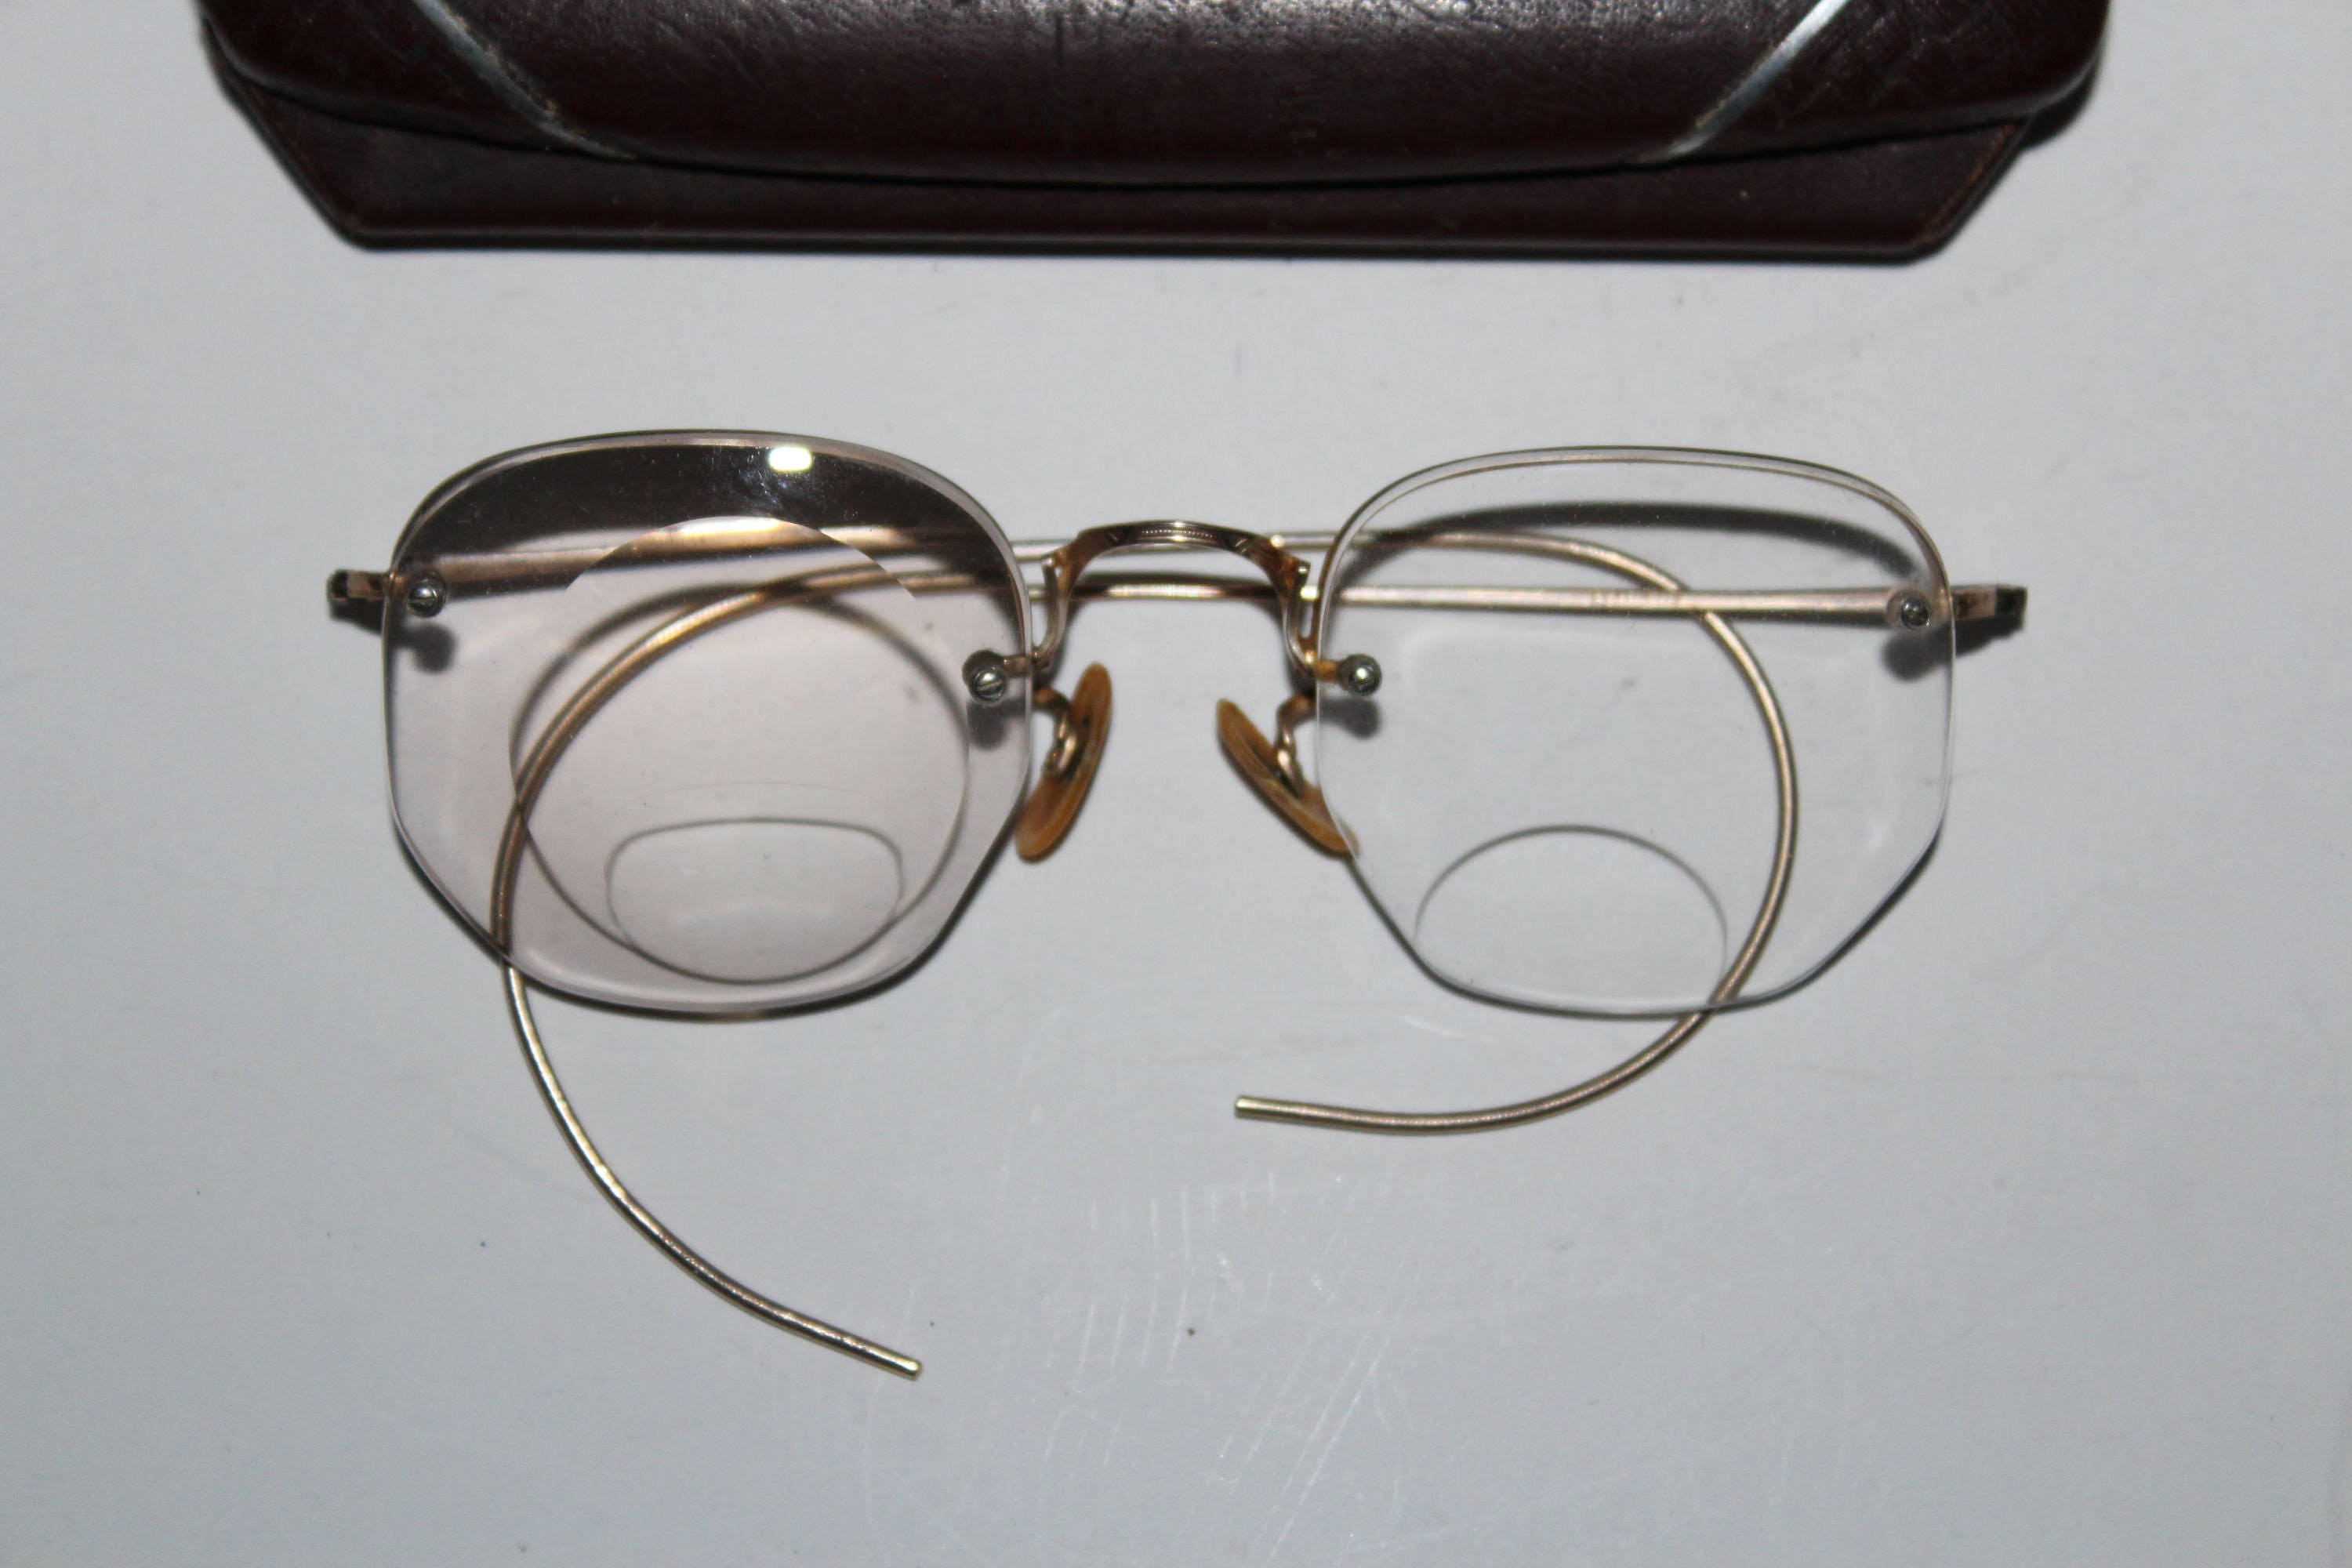 Antique Eyeglasses by Shuron 10K Gold Filled Frames with Case